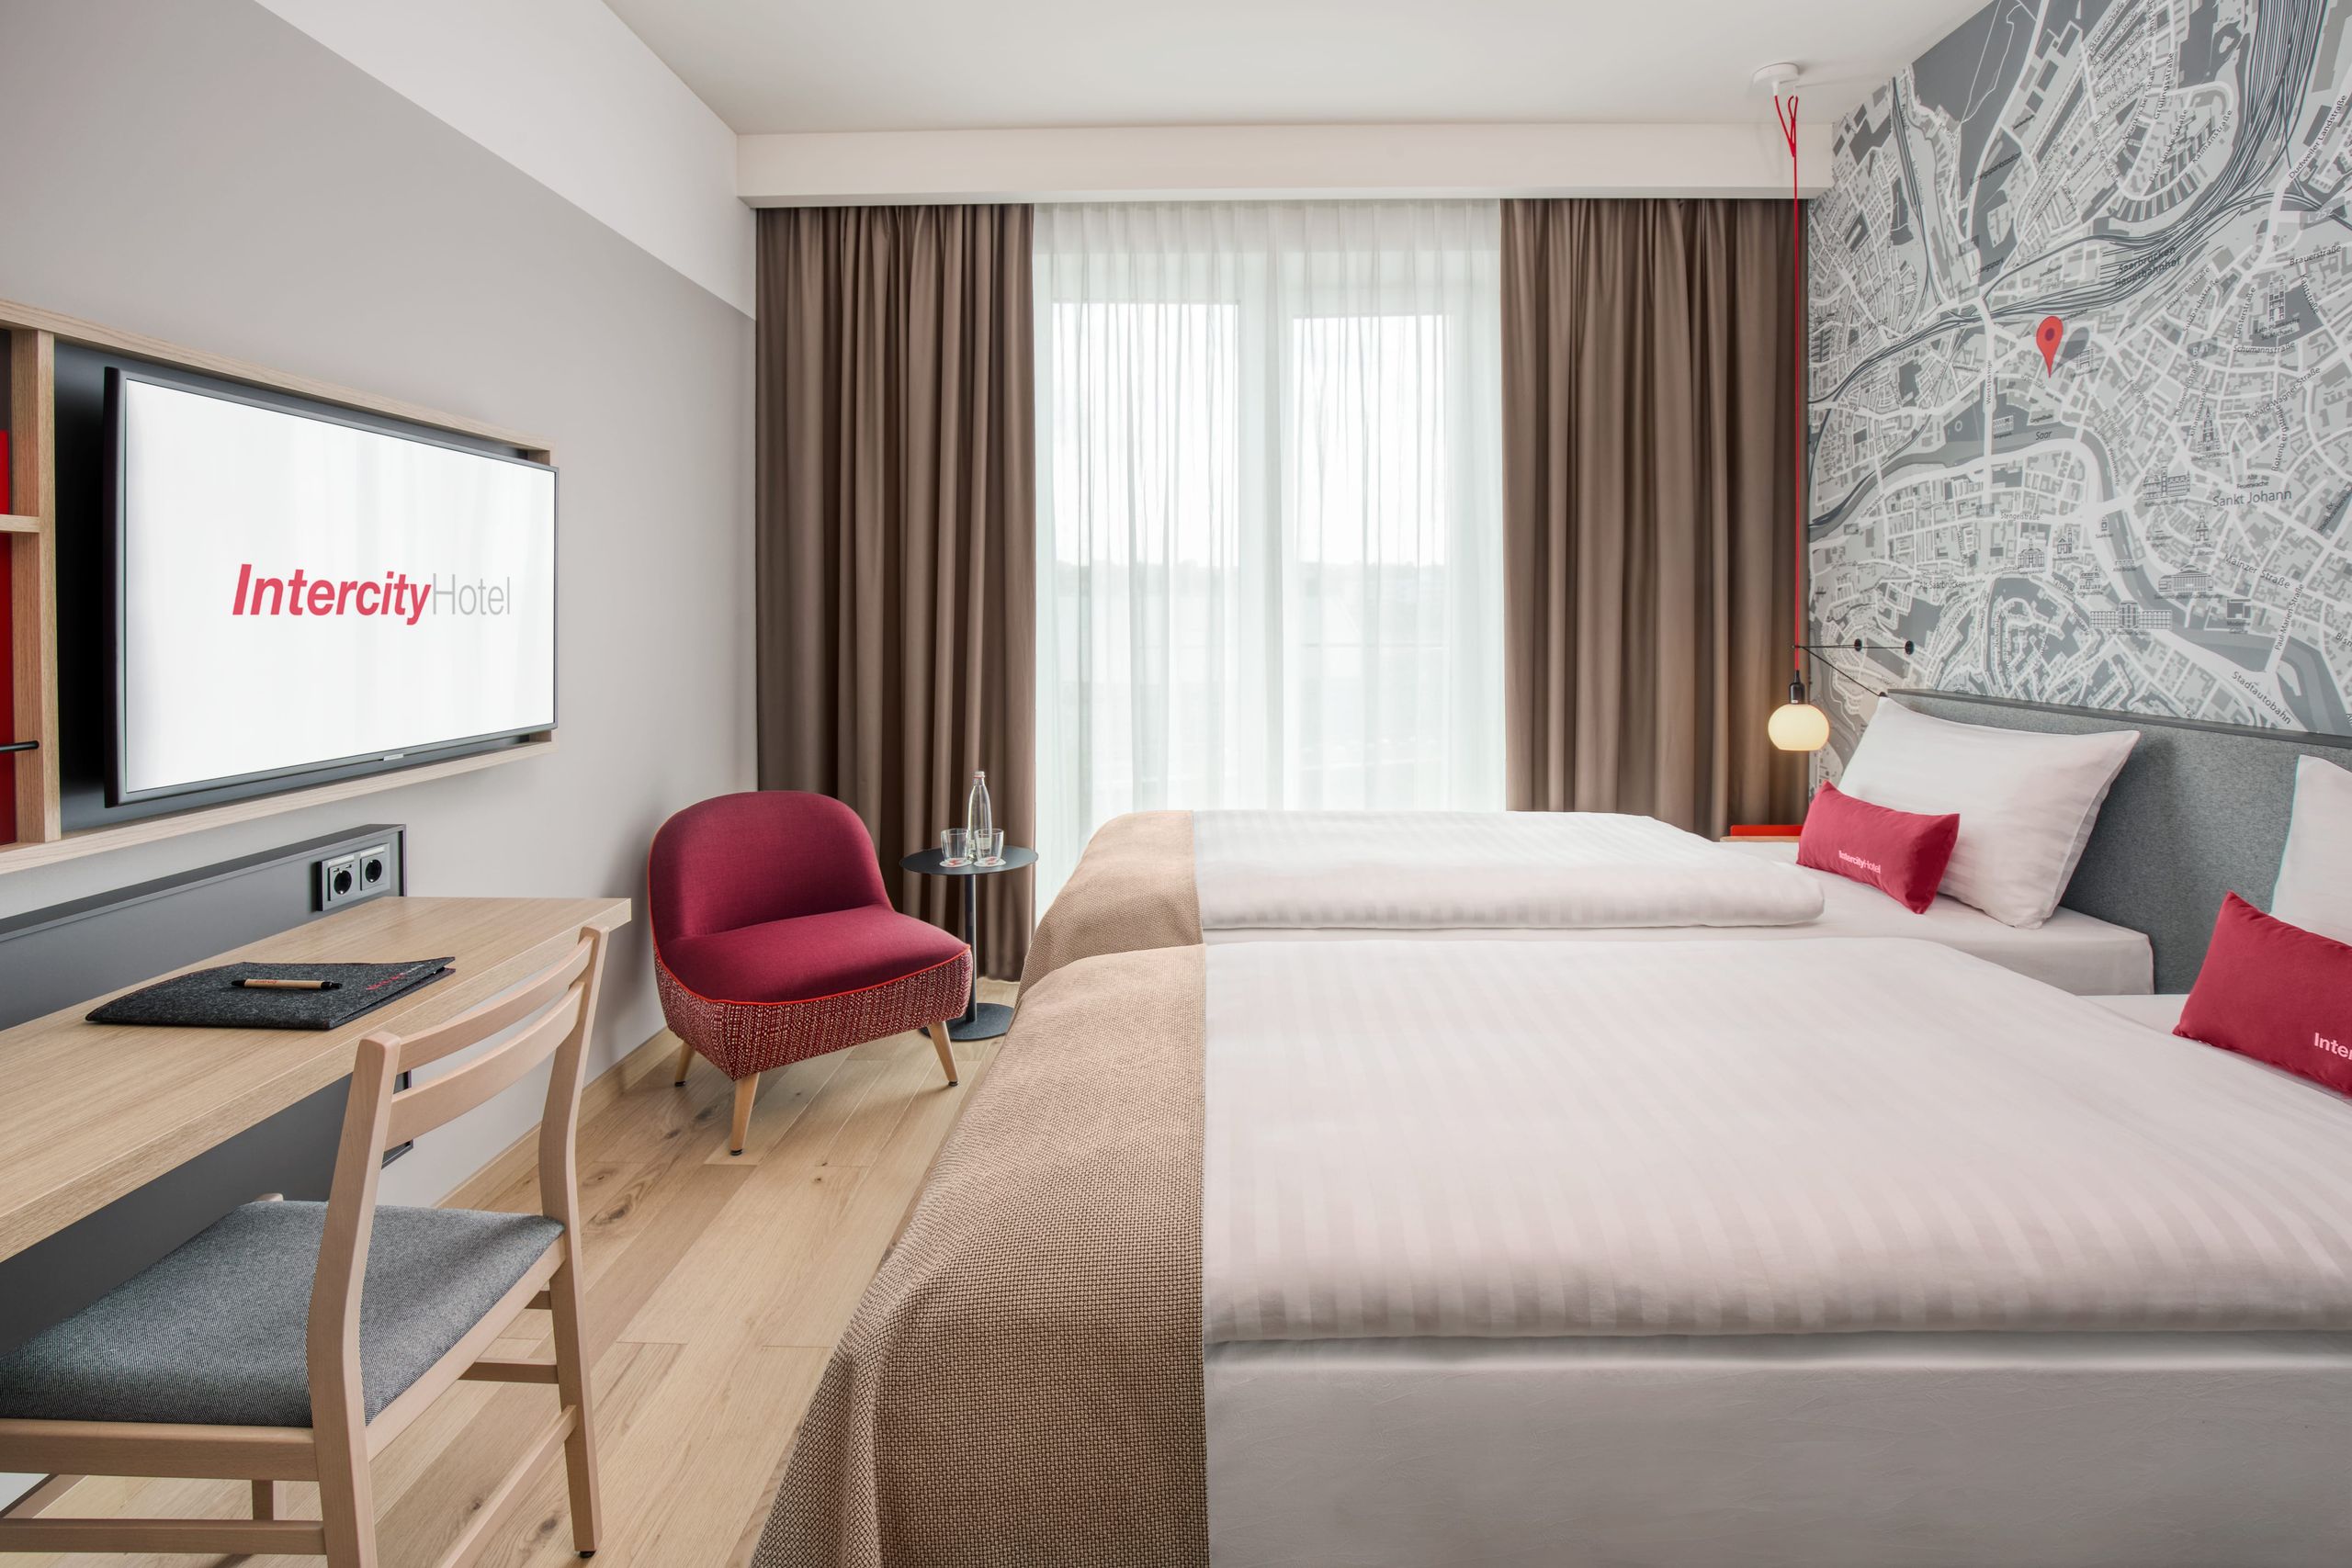 Hotel in Saarbrücken | IntercityHotel Saarbrücken - Business Room with two separate beds